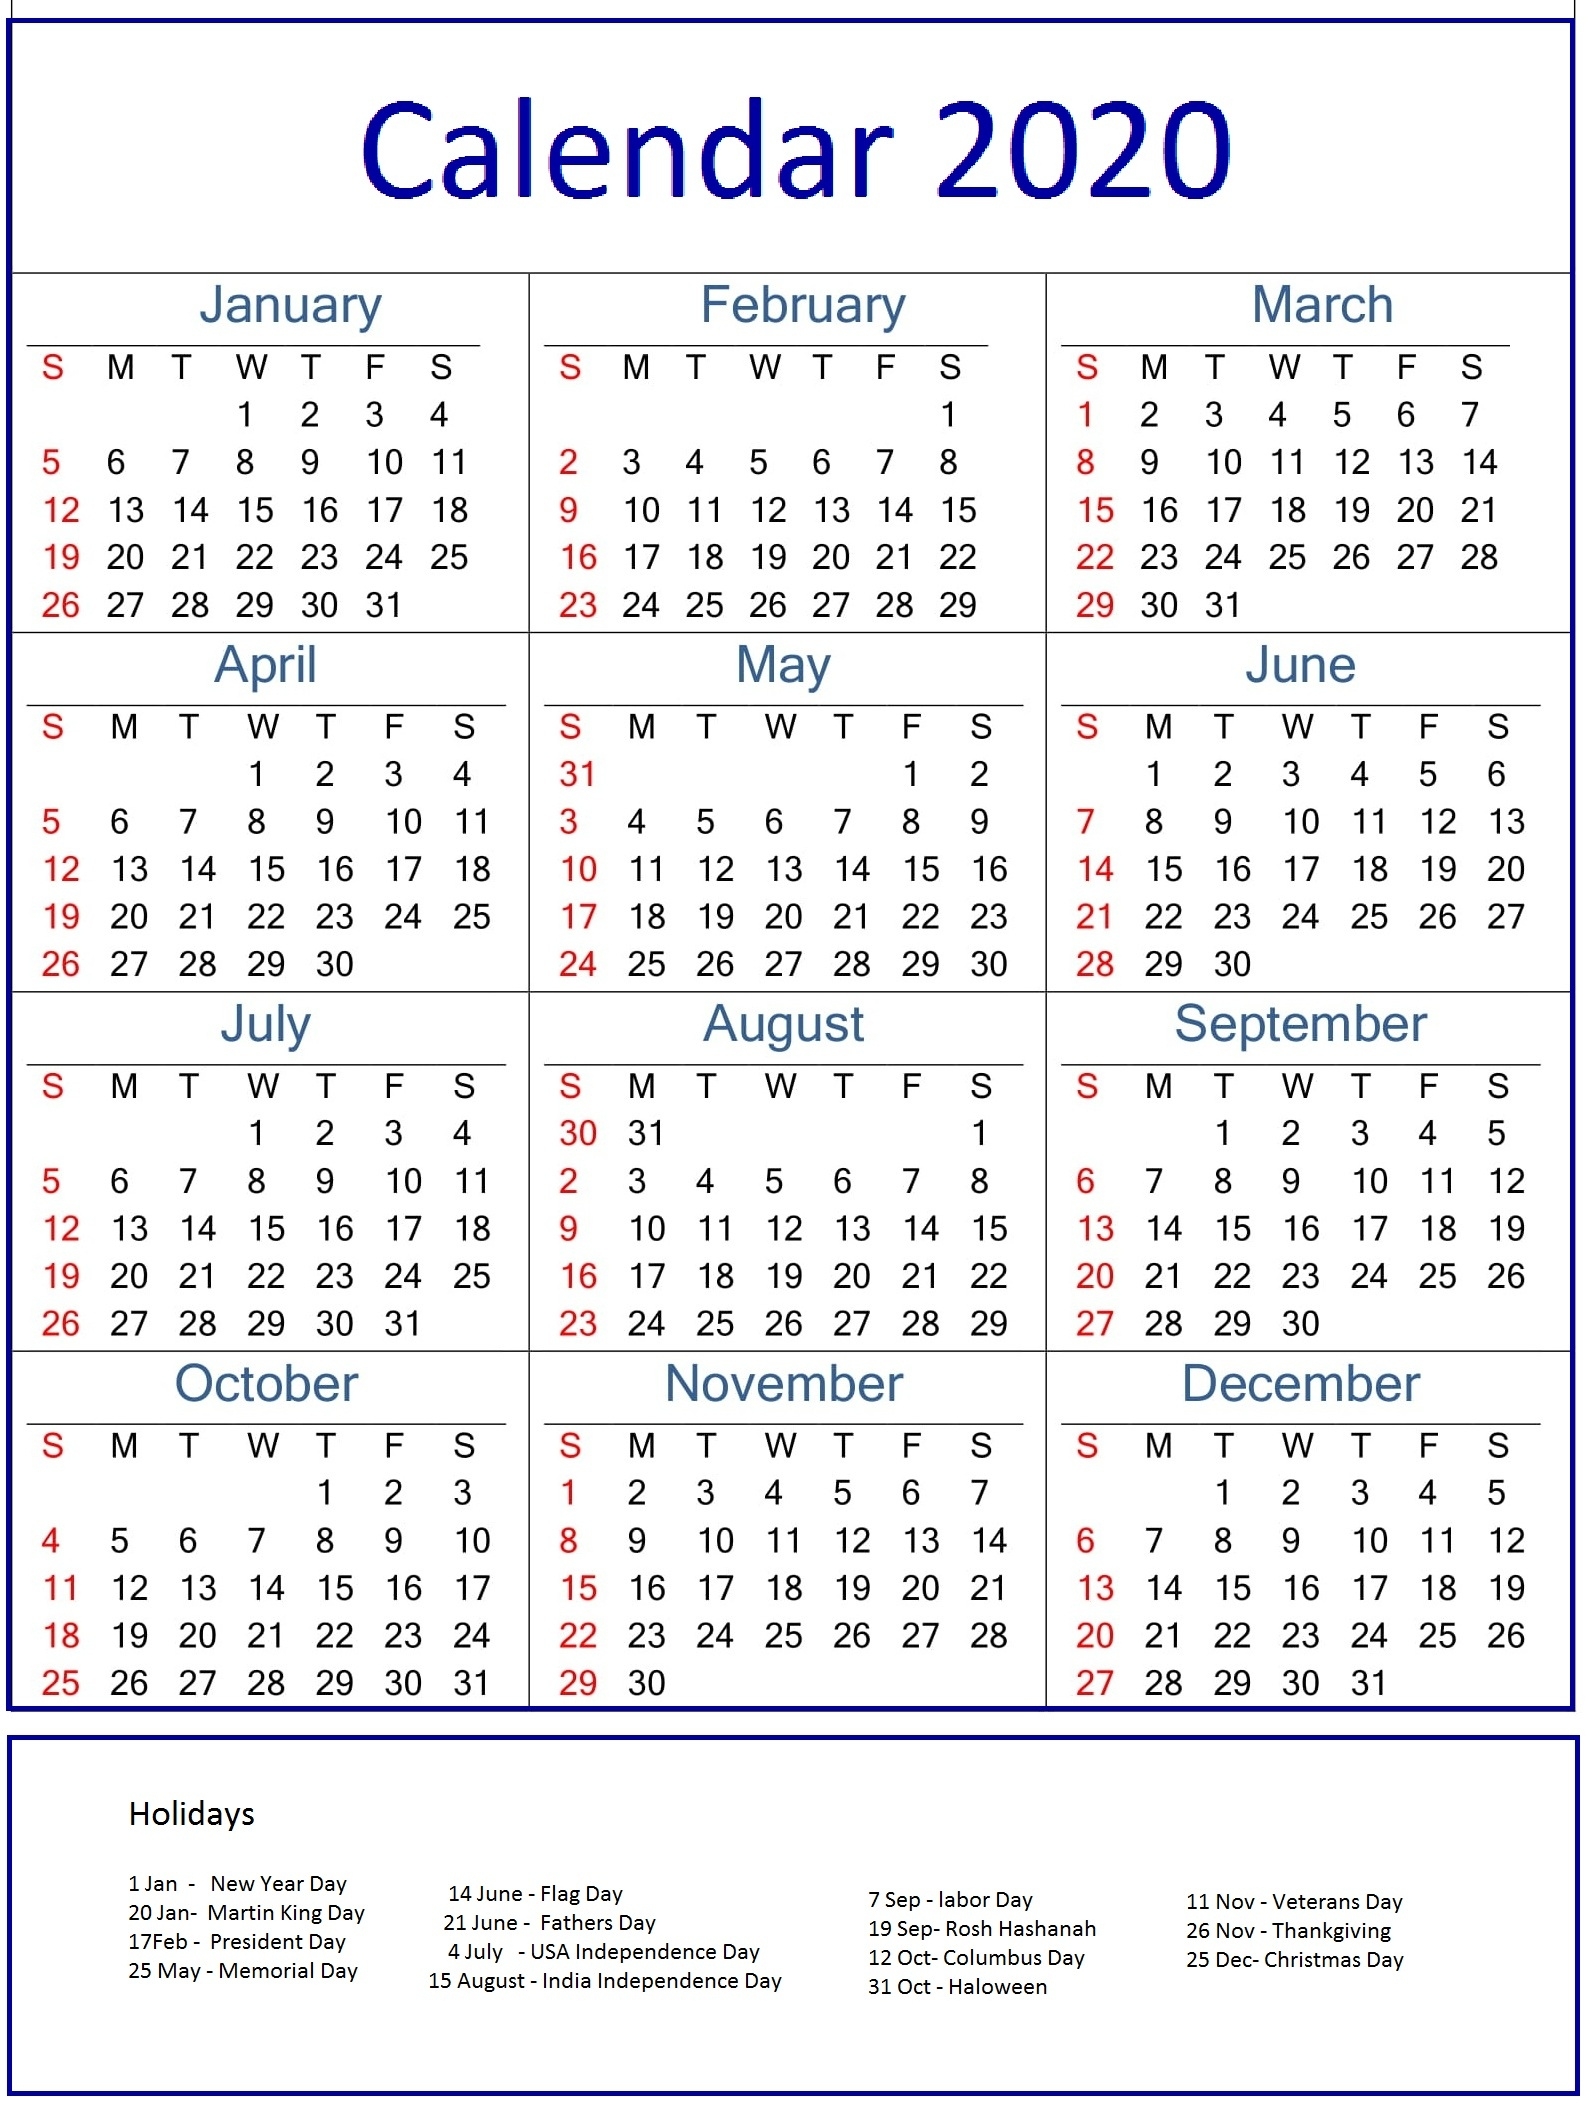 Monthly Calendar Holidays 2020 | Calendar Ideas Design Creative Dashing 2020 Calendar Hra Consulting